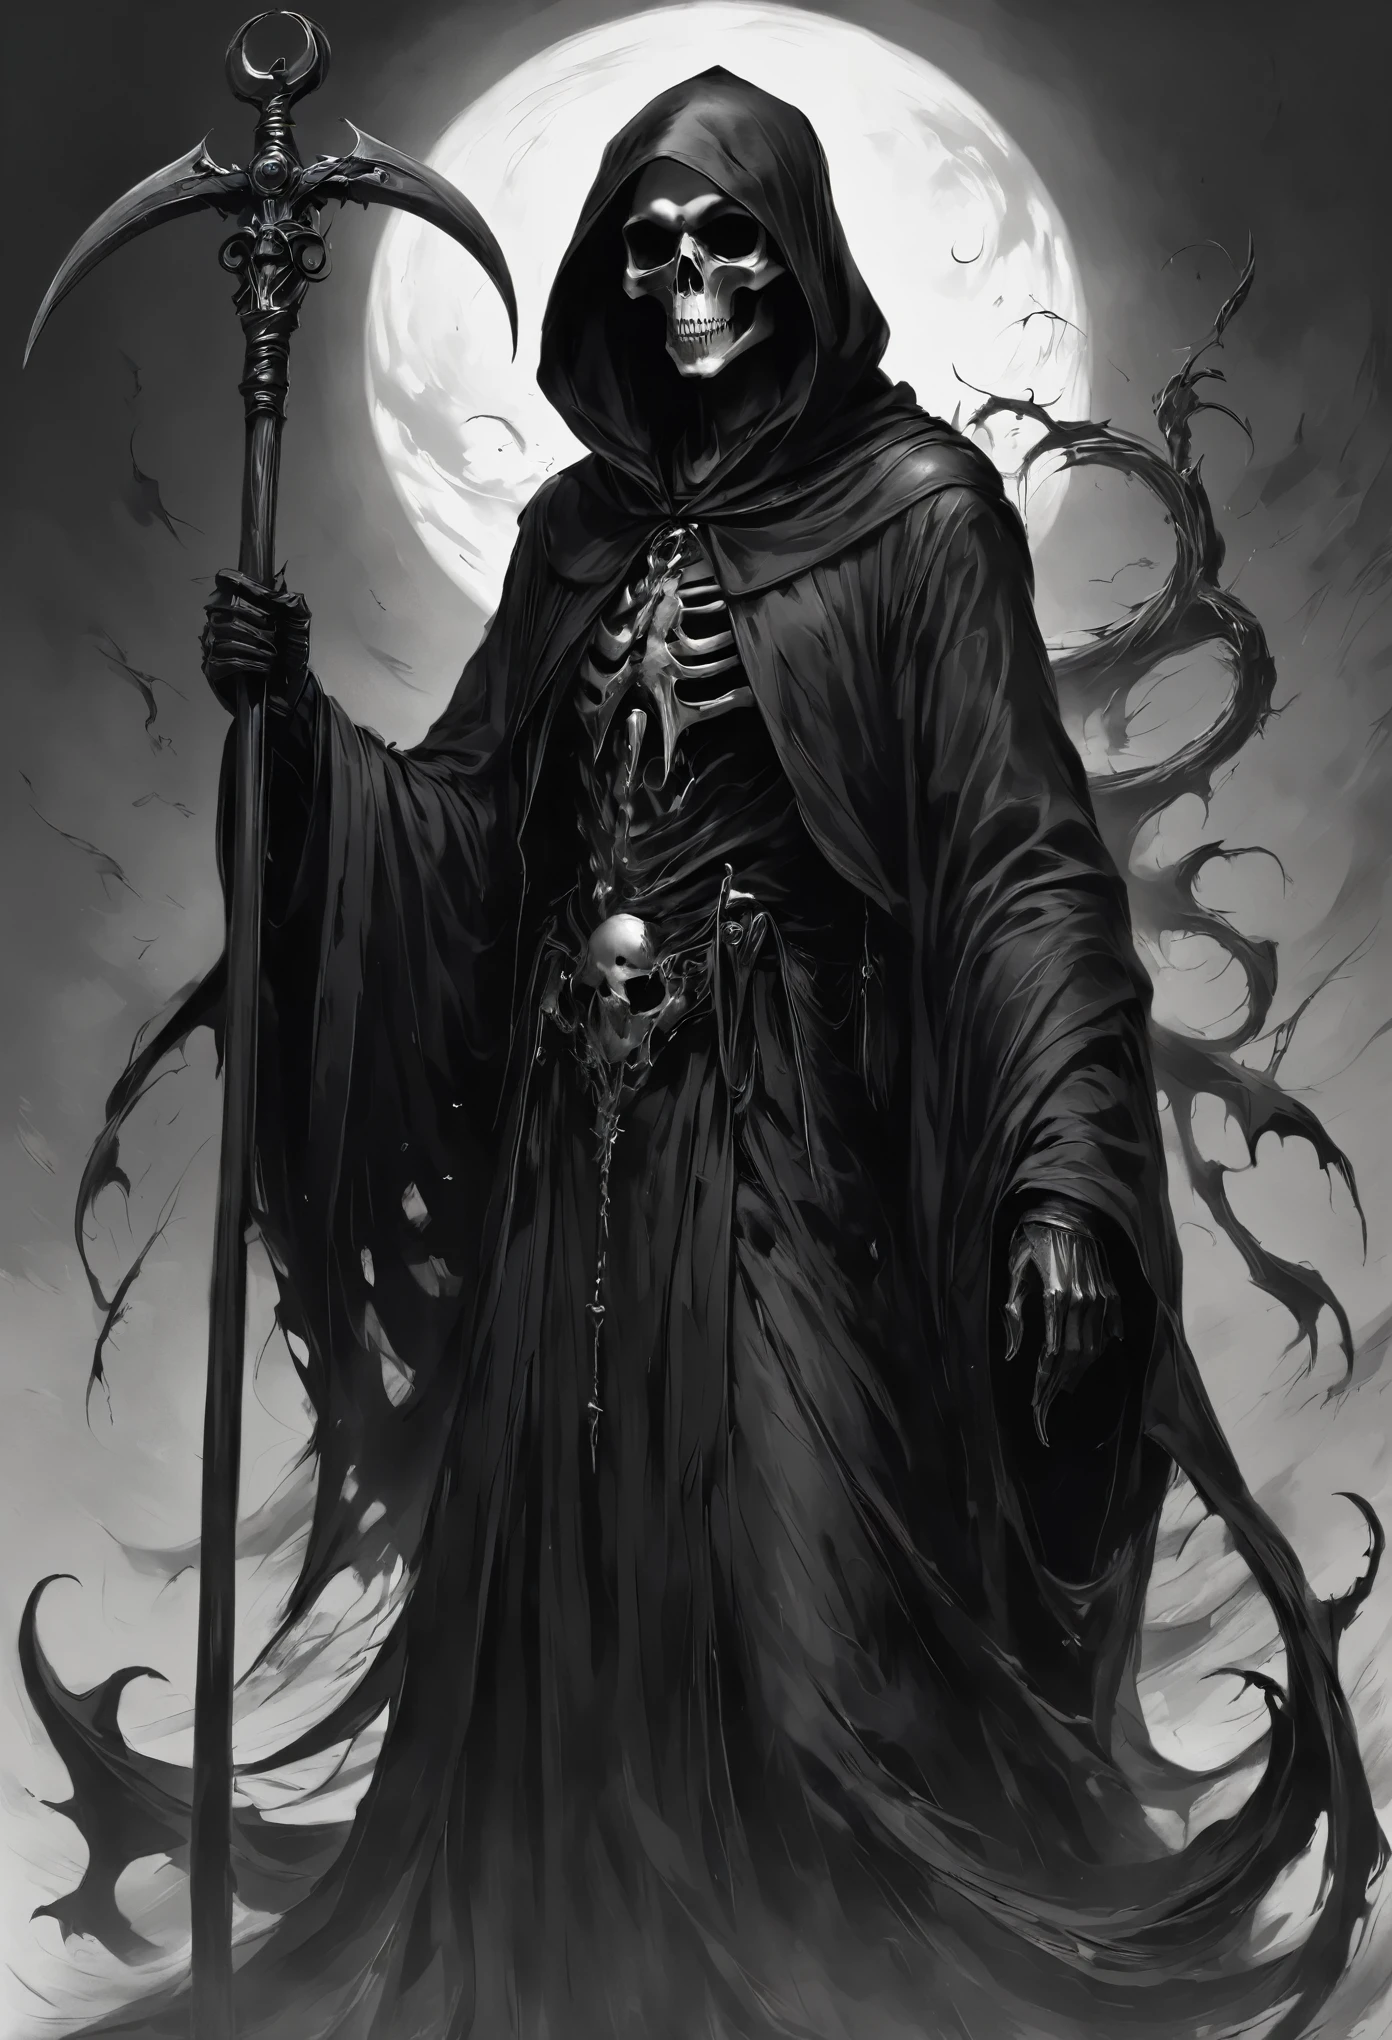 Grim Reaper drawn in black